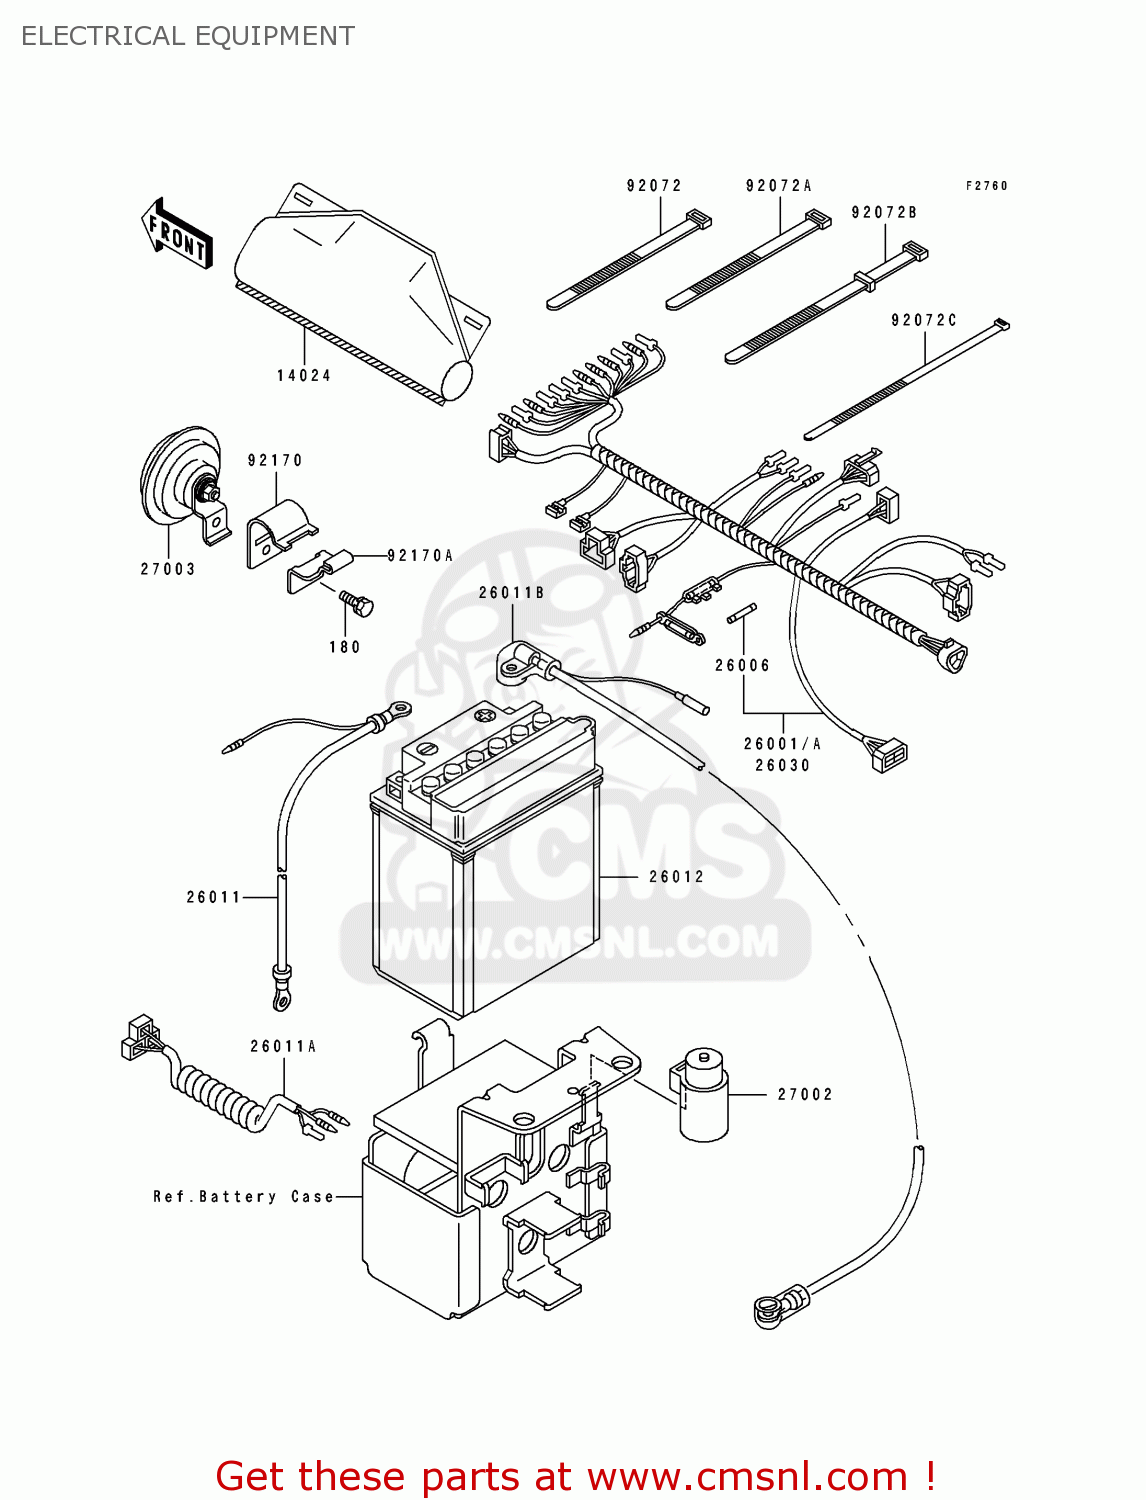 Kawasaki 1985 B1 Kx60 Parts Lists | Car Interior Design wiring diagram kawasaki bayou 4 wheeler 